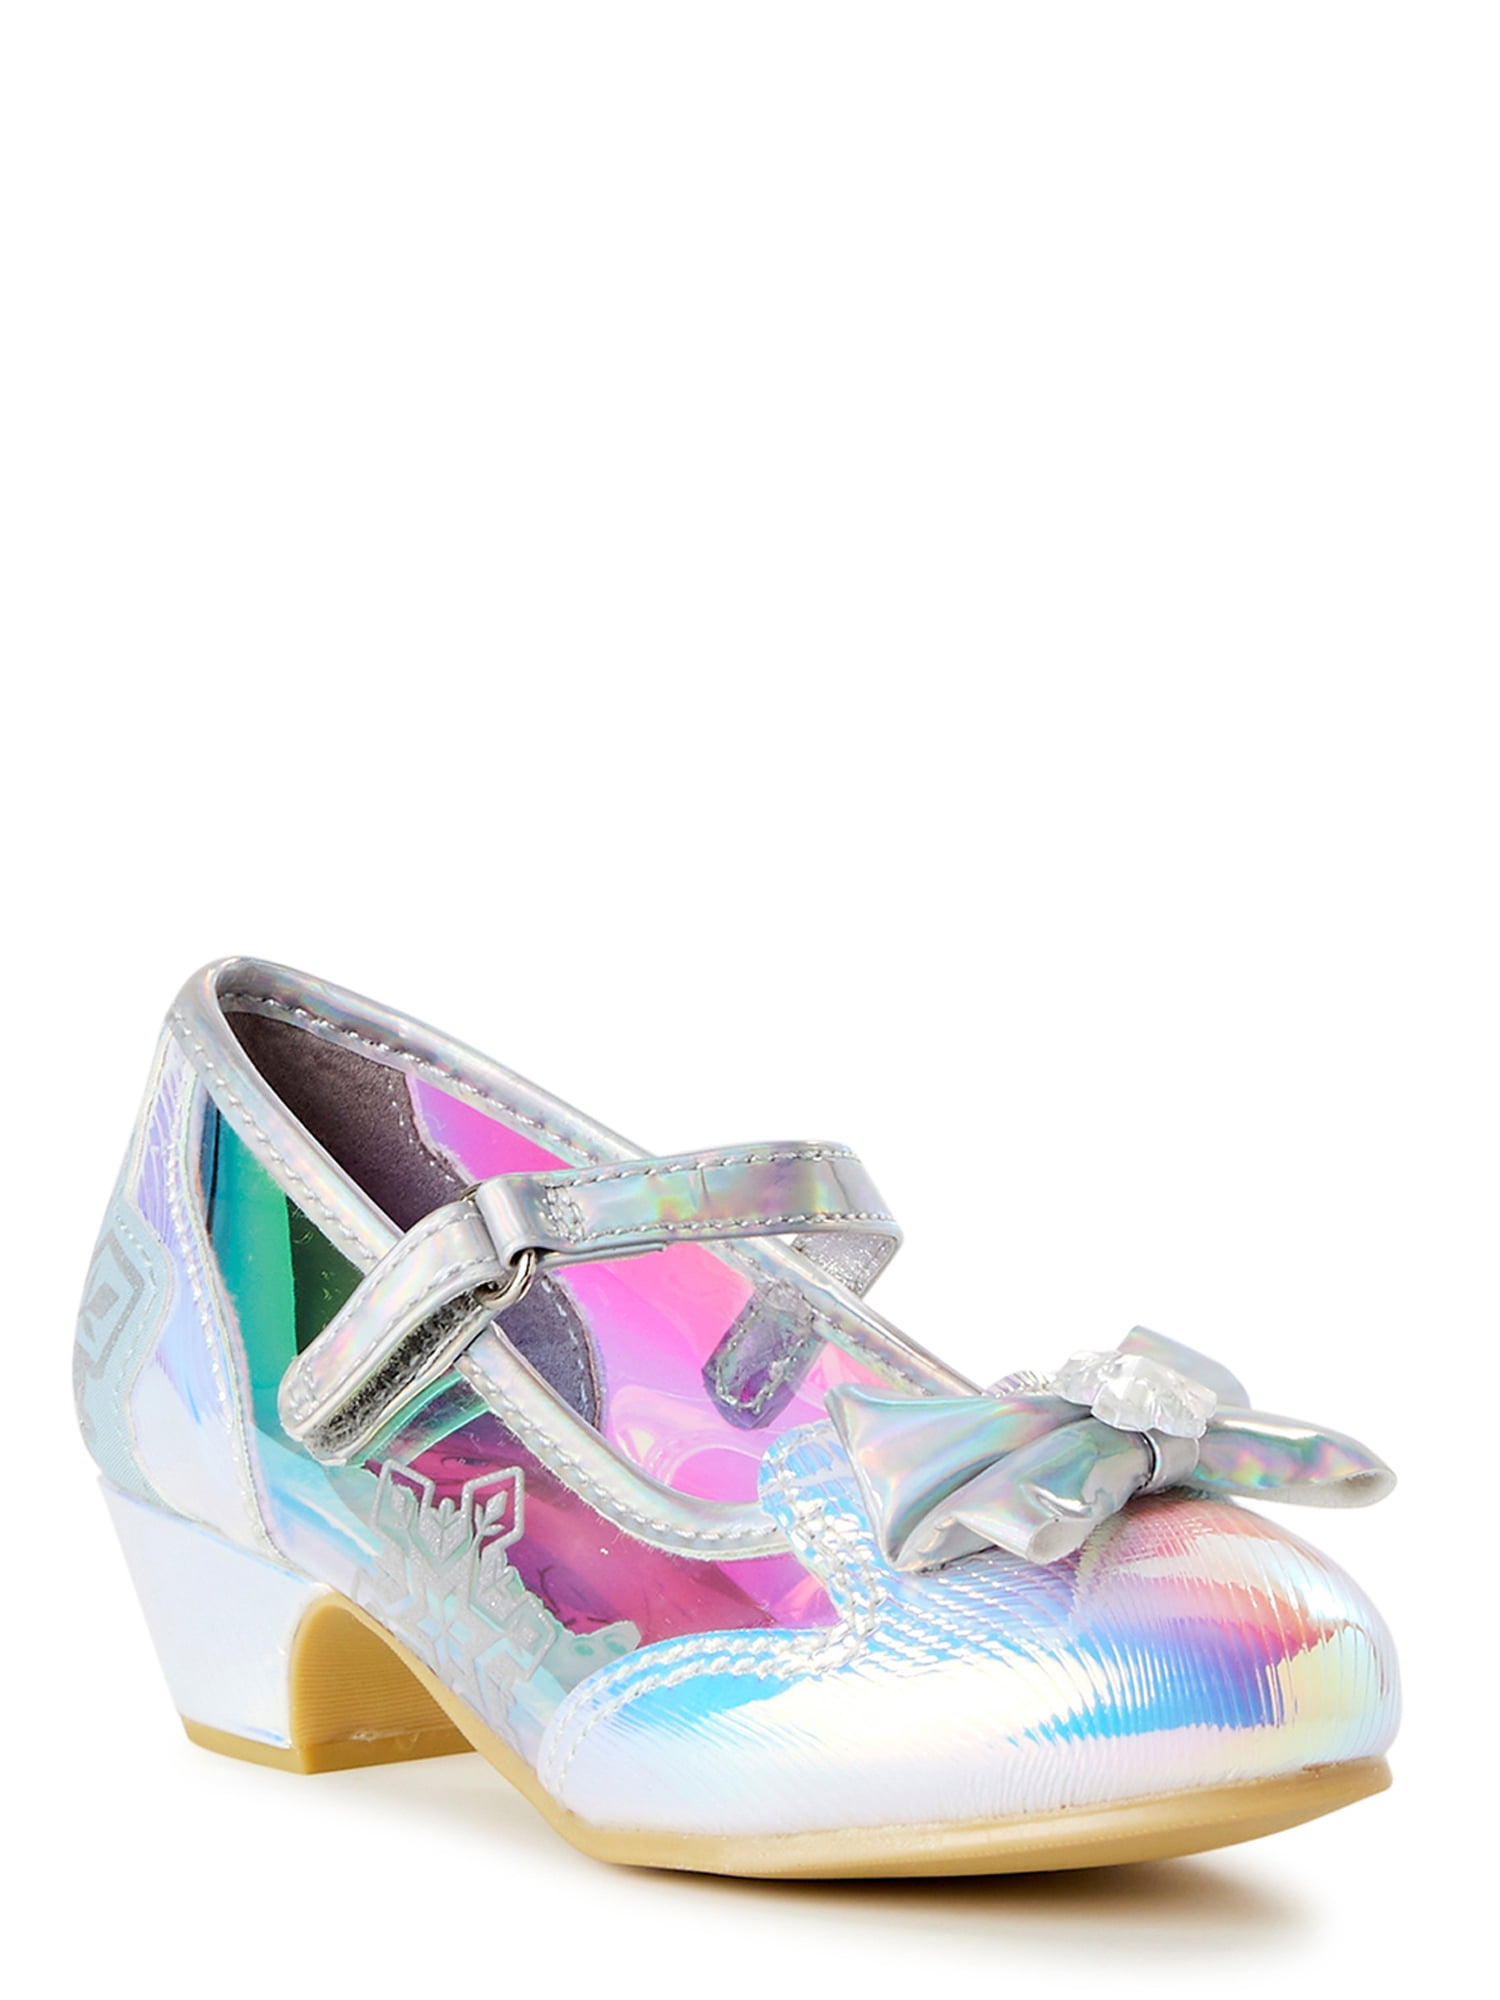 Disney Frozen Toddler Girl Low Heel Dress Up Shoes, Sizes 7-12